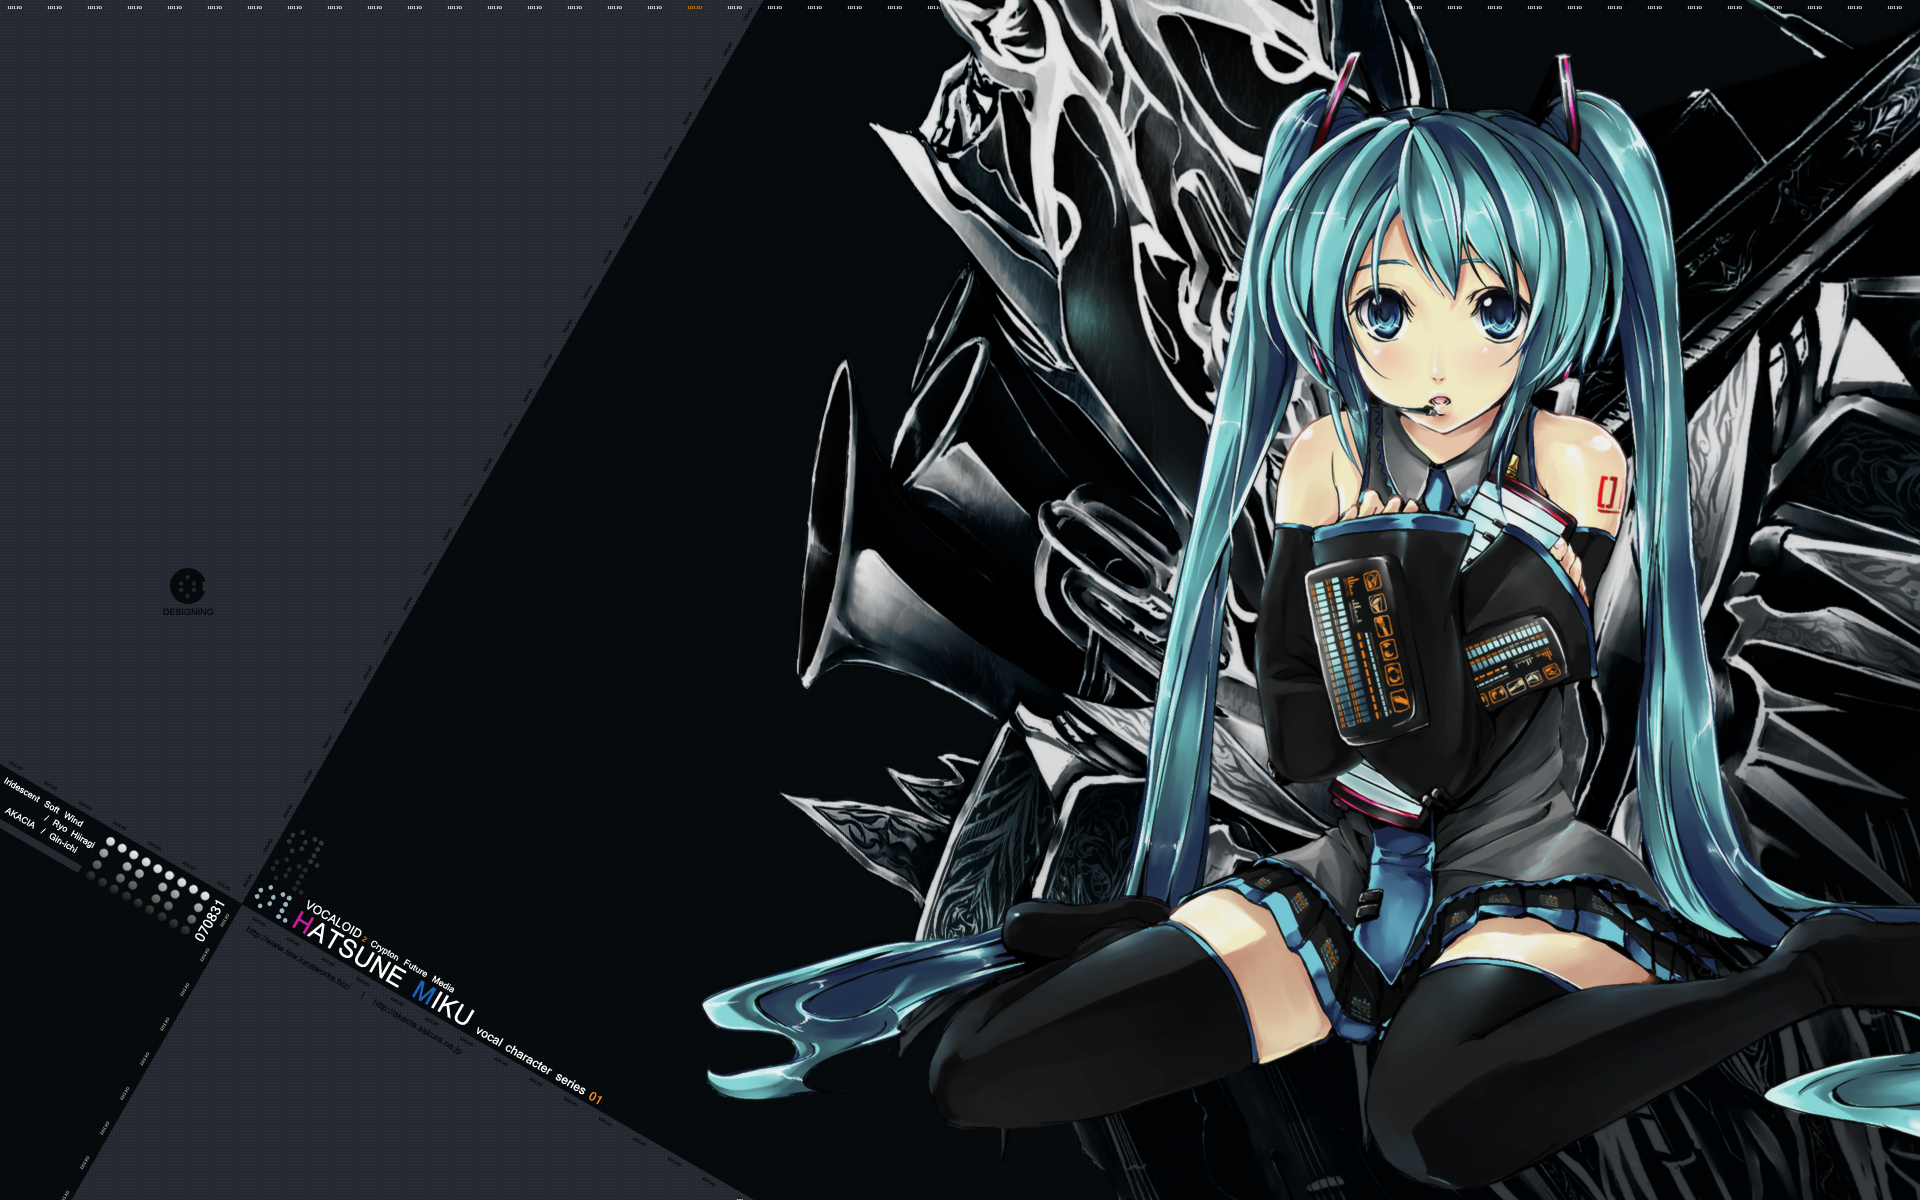  Vocaloid HQ Background Images